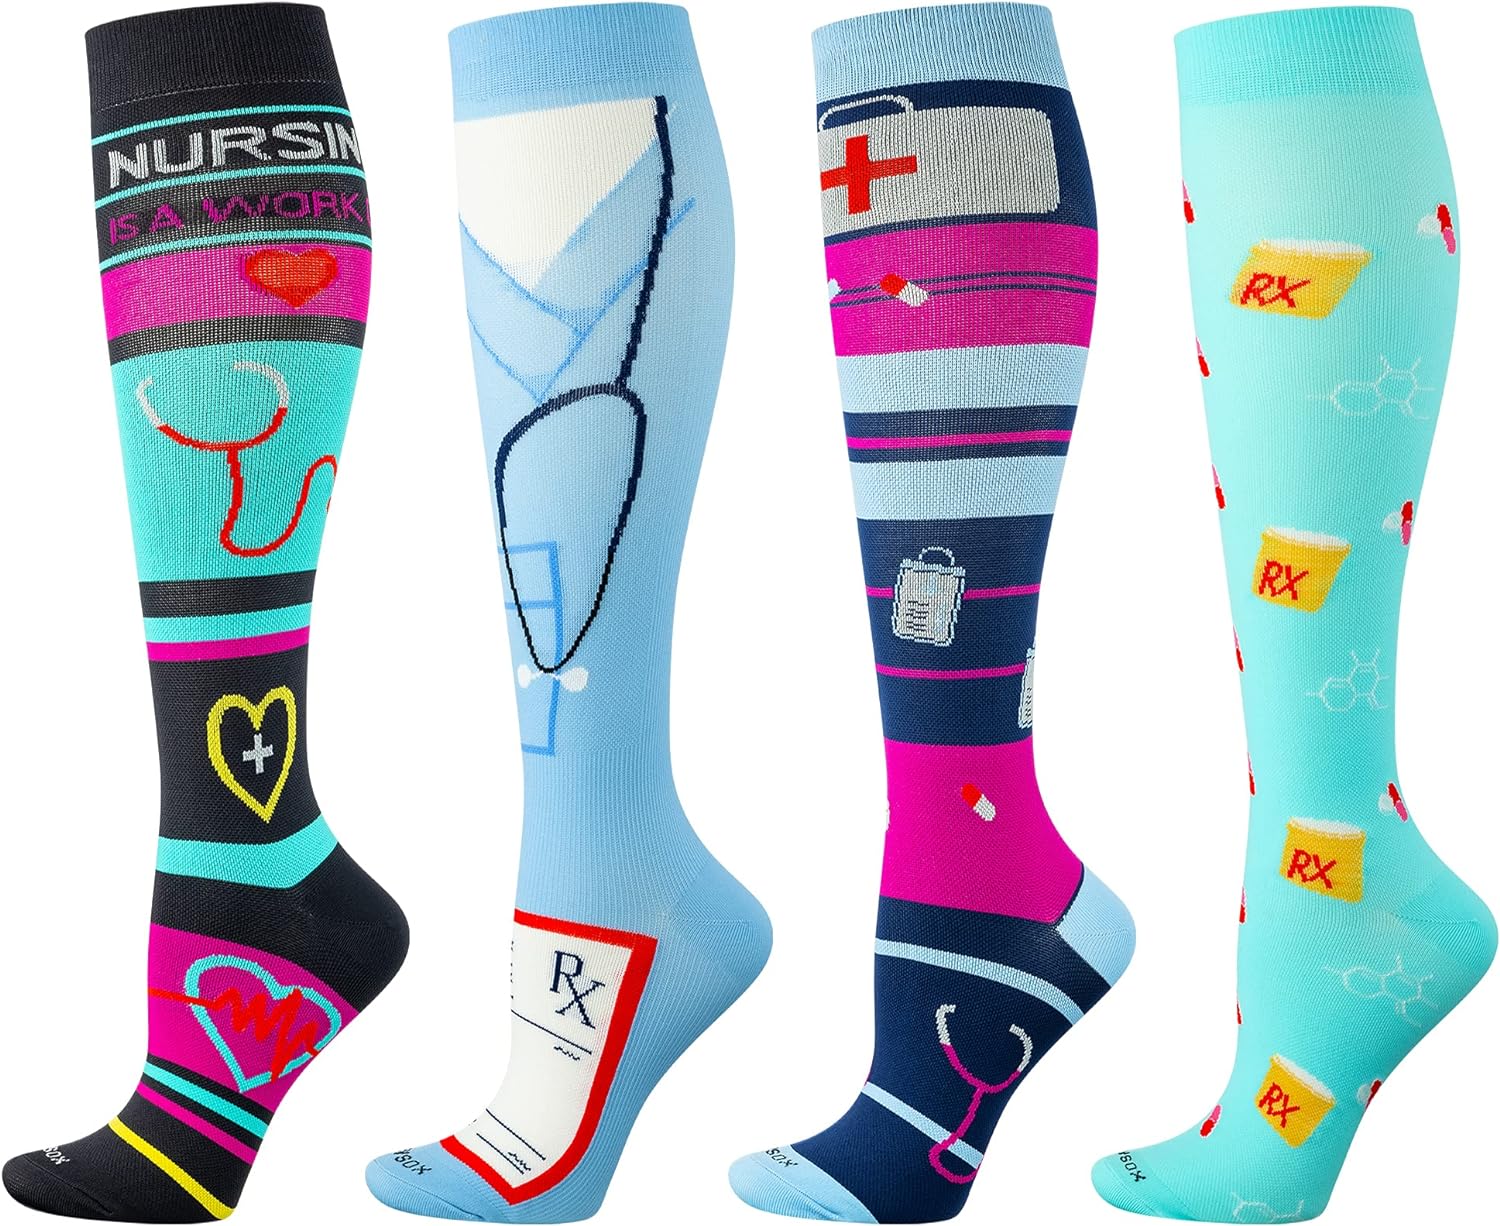 LEVSOX Compression Socks Women and Men, 20-30mmHg, Best for Nurses, Travel, Pregnancy